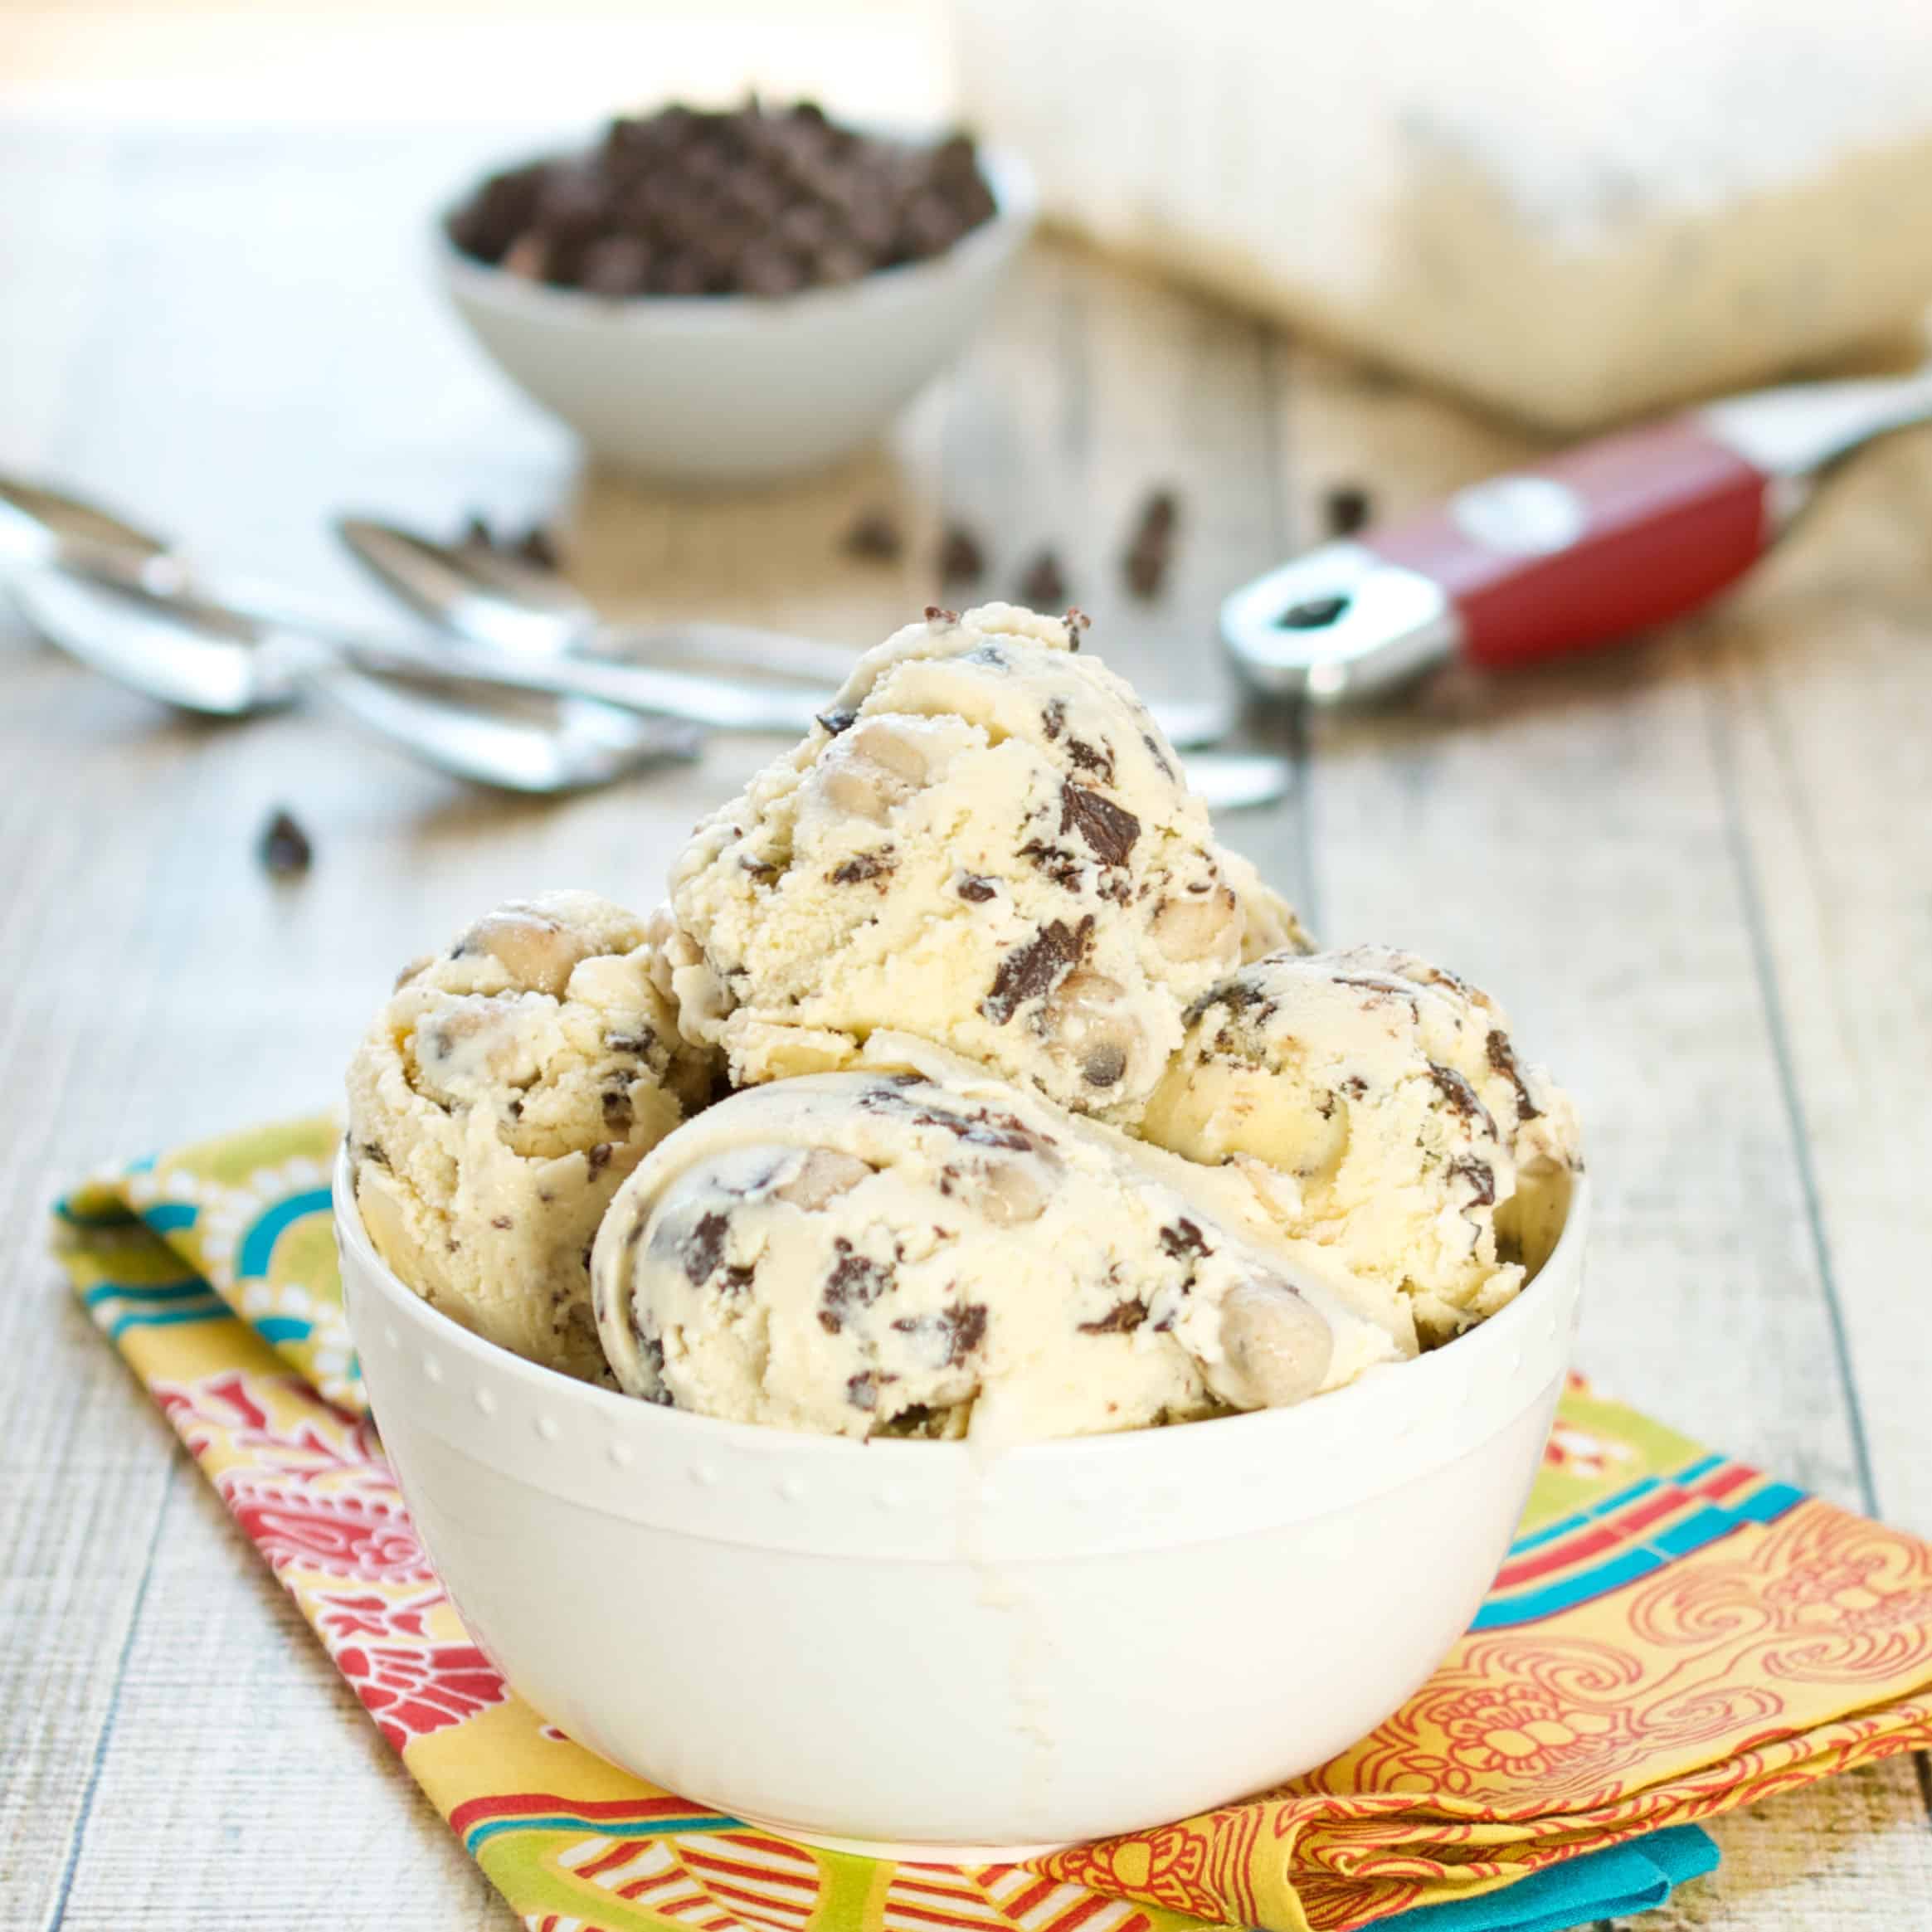 https://sweetpeaskitchen.com/wp-content/uploads/2013/08/wp-contentuploads201407Chocolate-Chip-Cookie-Dough-Ice-Cream3.jpg.00016998.jpg